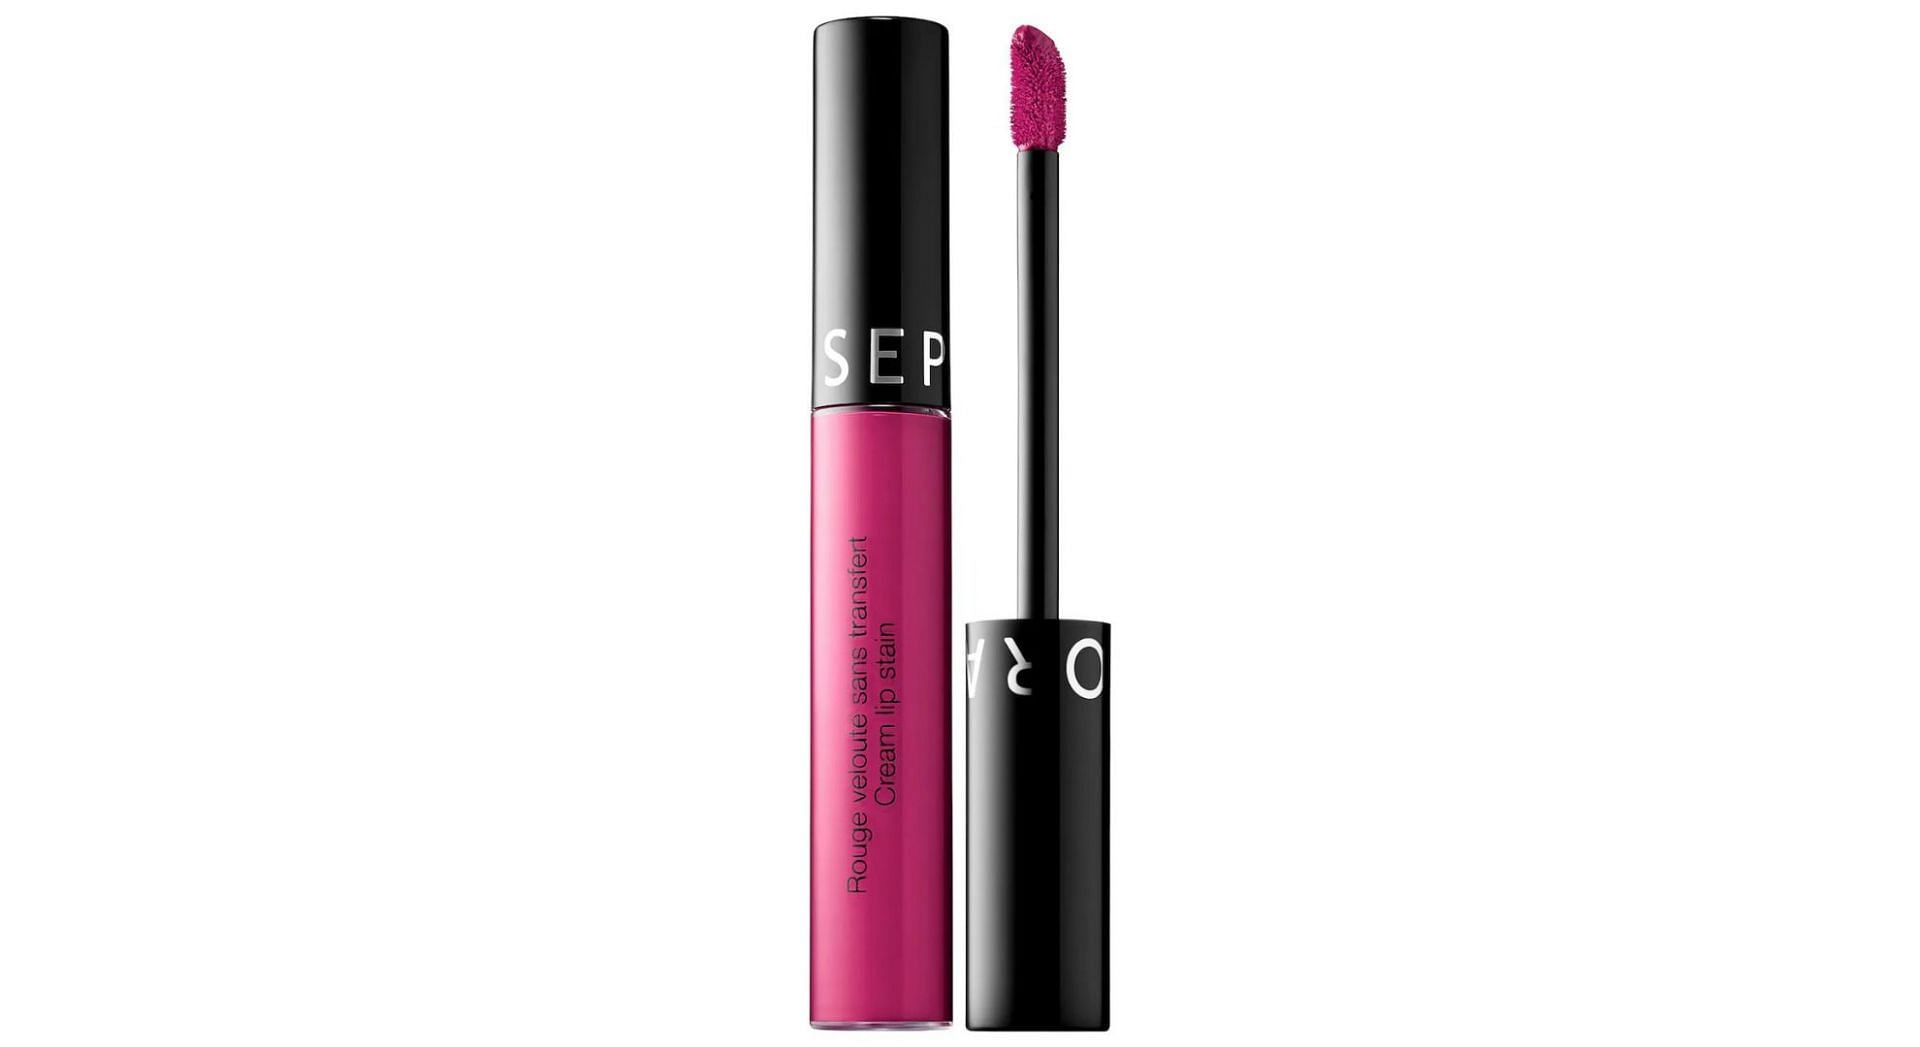 Sephora Collection Cream Lip Stain Liquid Lipstick - 88 Fearless Fuchsia (Image via Sephora)